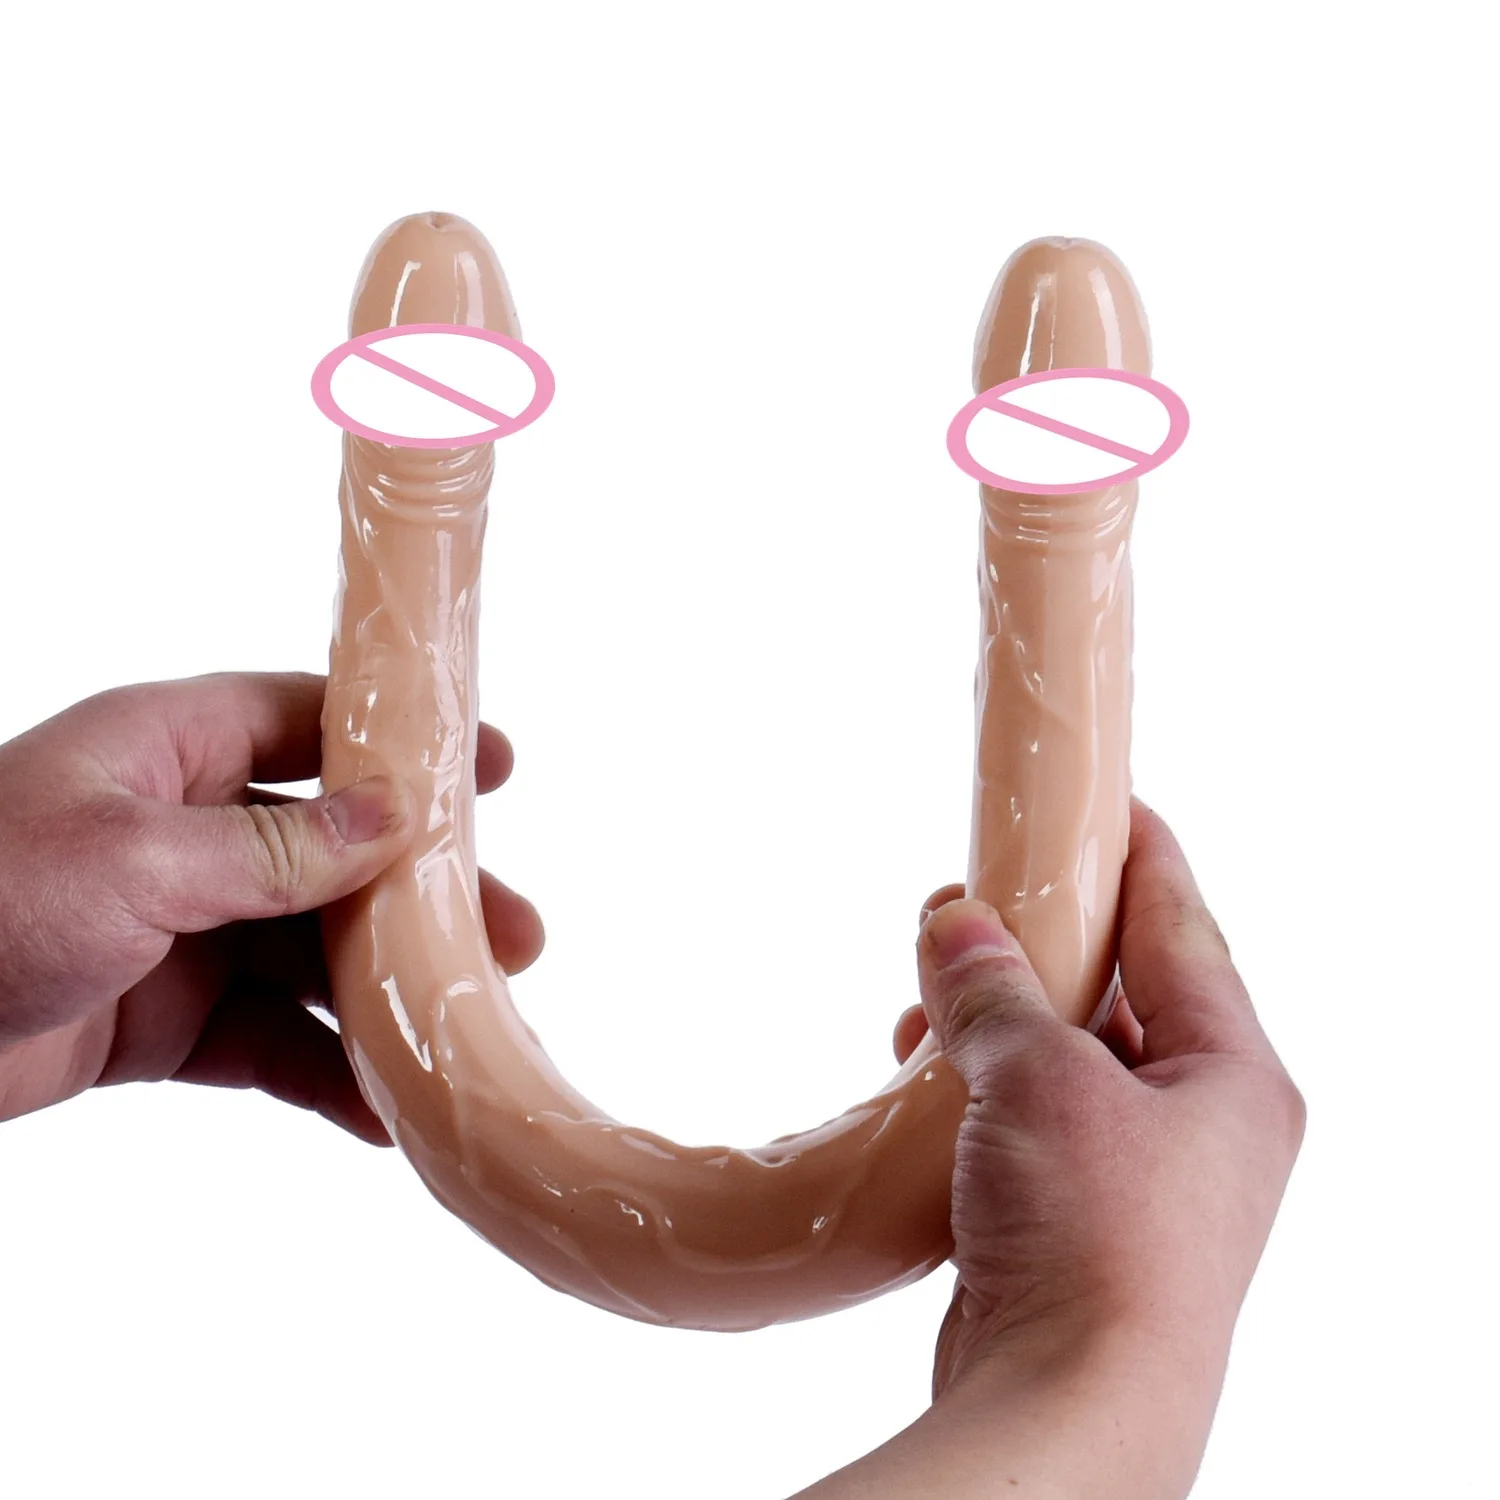 China Factory Wholesale Double head Dildo Long Jelly Realistic Dildo Double Ended Dildo Flexible Big Penis for Women Masturbator Sex Toys for Lesbian Wholesales Hbb8317cb826e4c25948e56371c6a36fcn